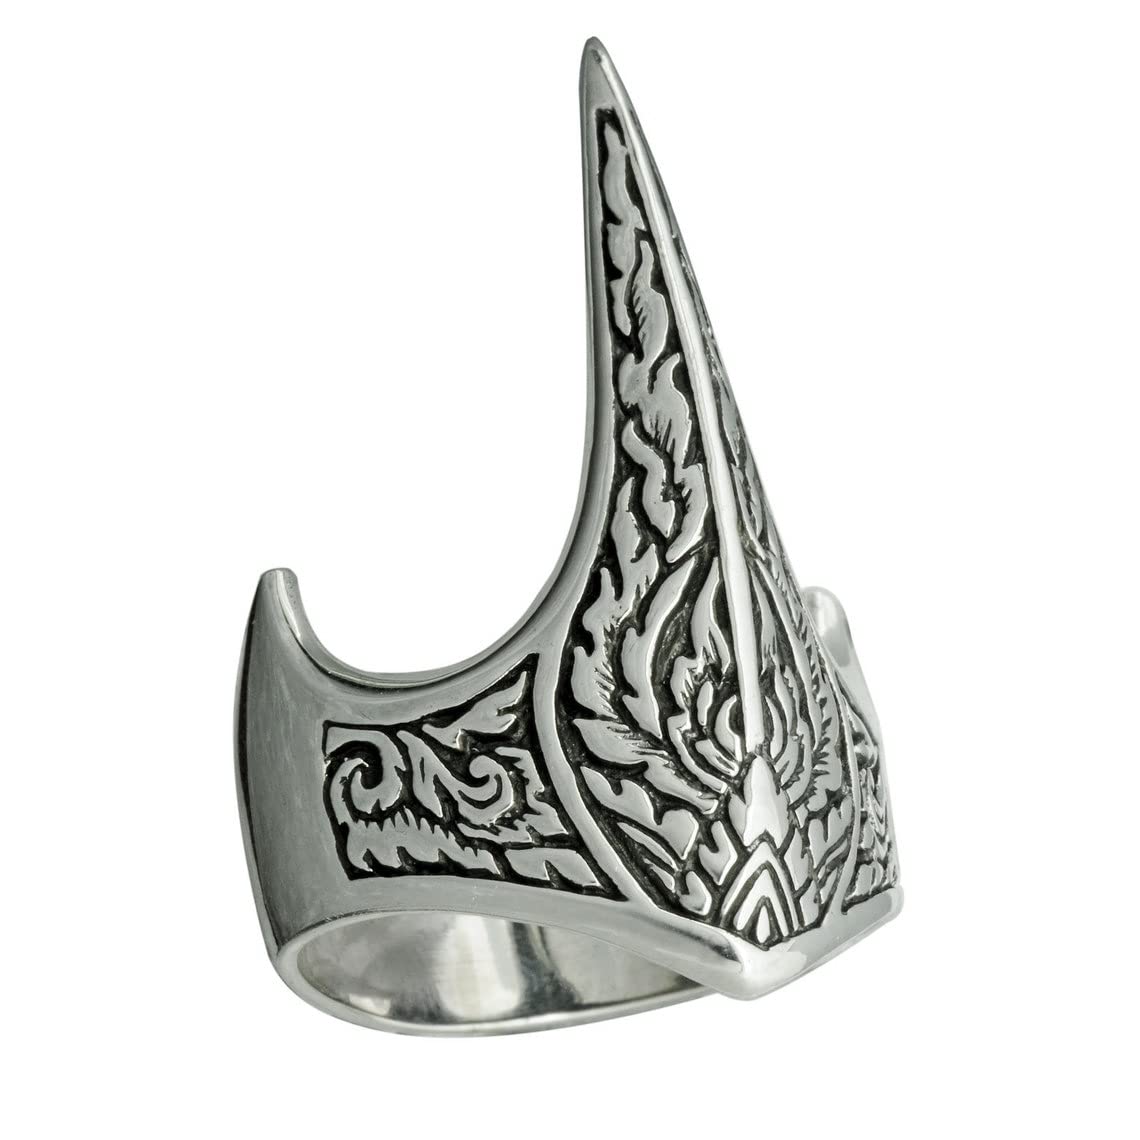 Three Spike Crown Silver Oxidized Ring | Waterproof | Stainless Steel